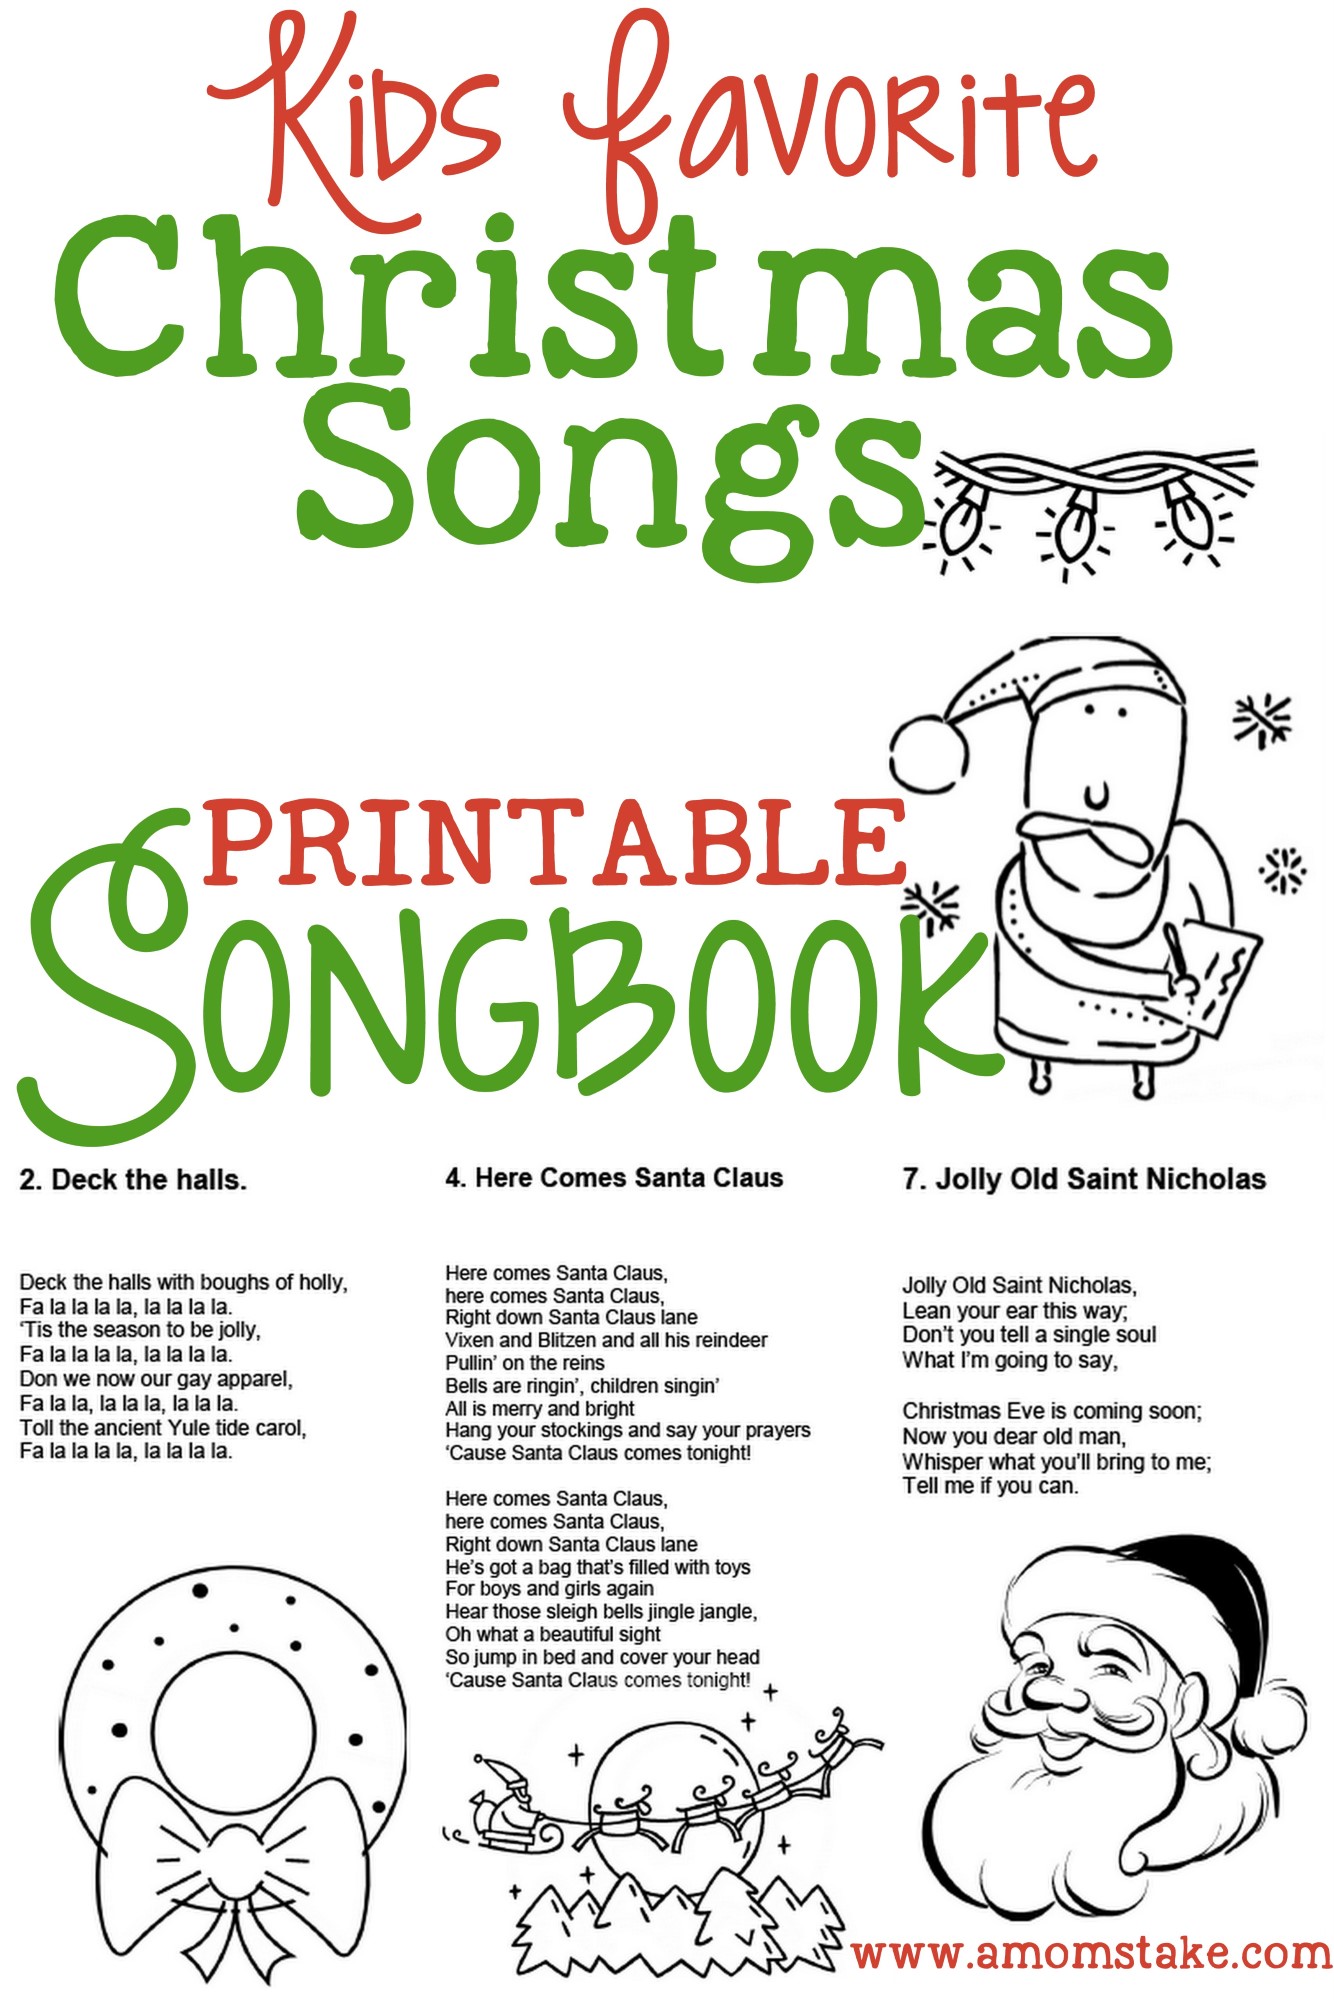 5-best-images-of-christmas-carol-songbook-printable-free-printable-christmas-song-lyrics-for